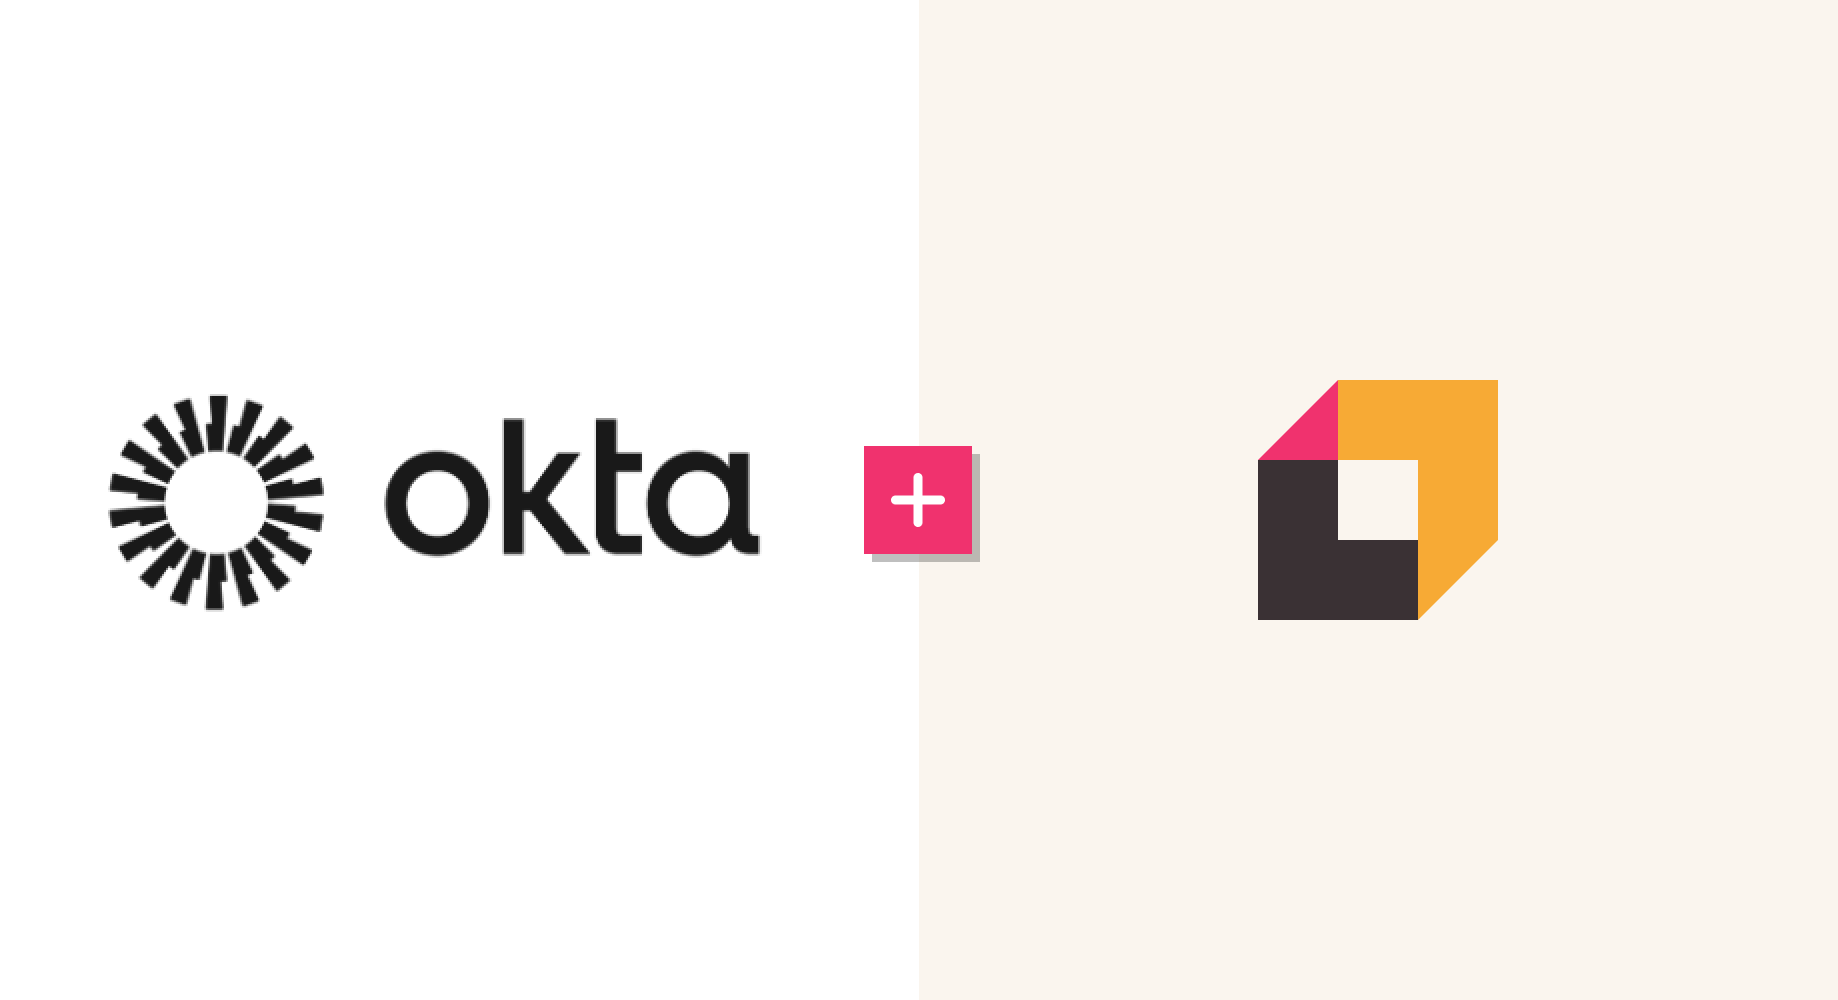 Okta logo and Hashboard logo side by side